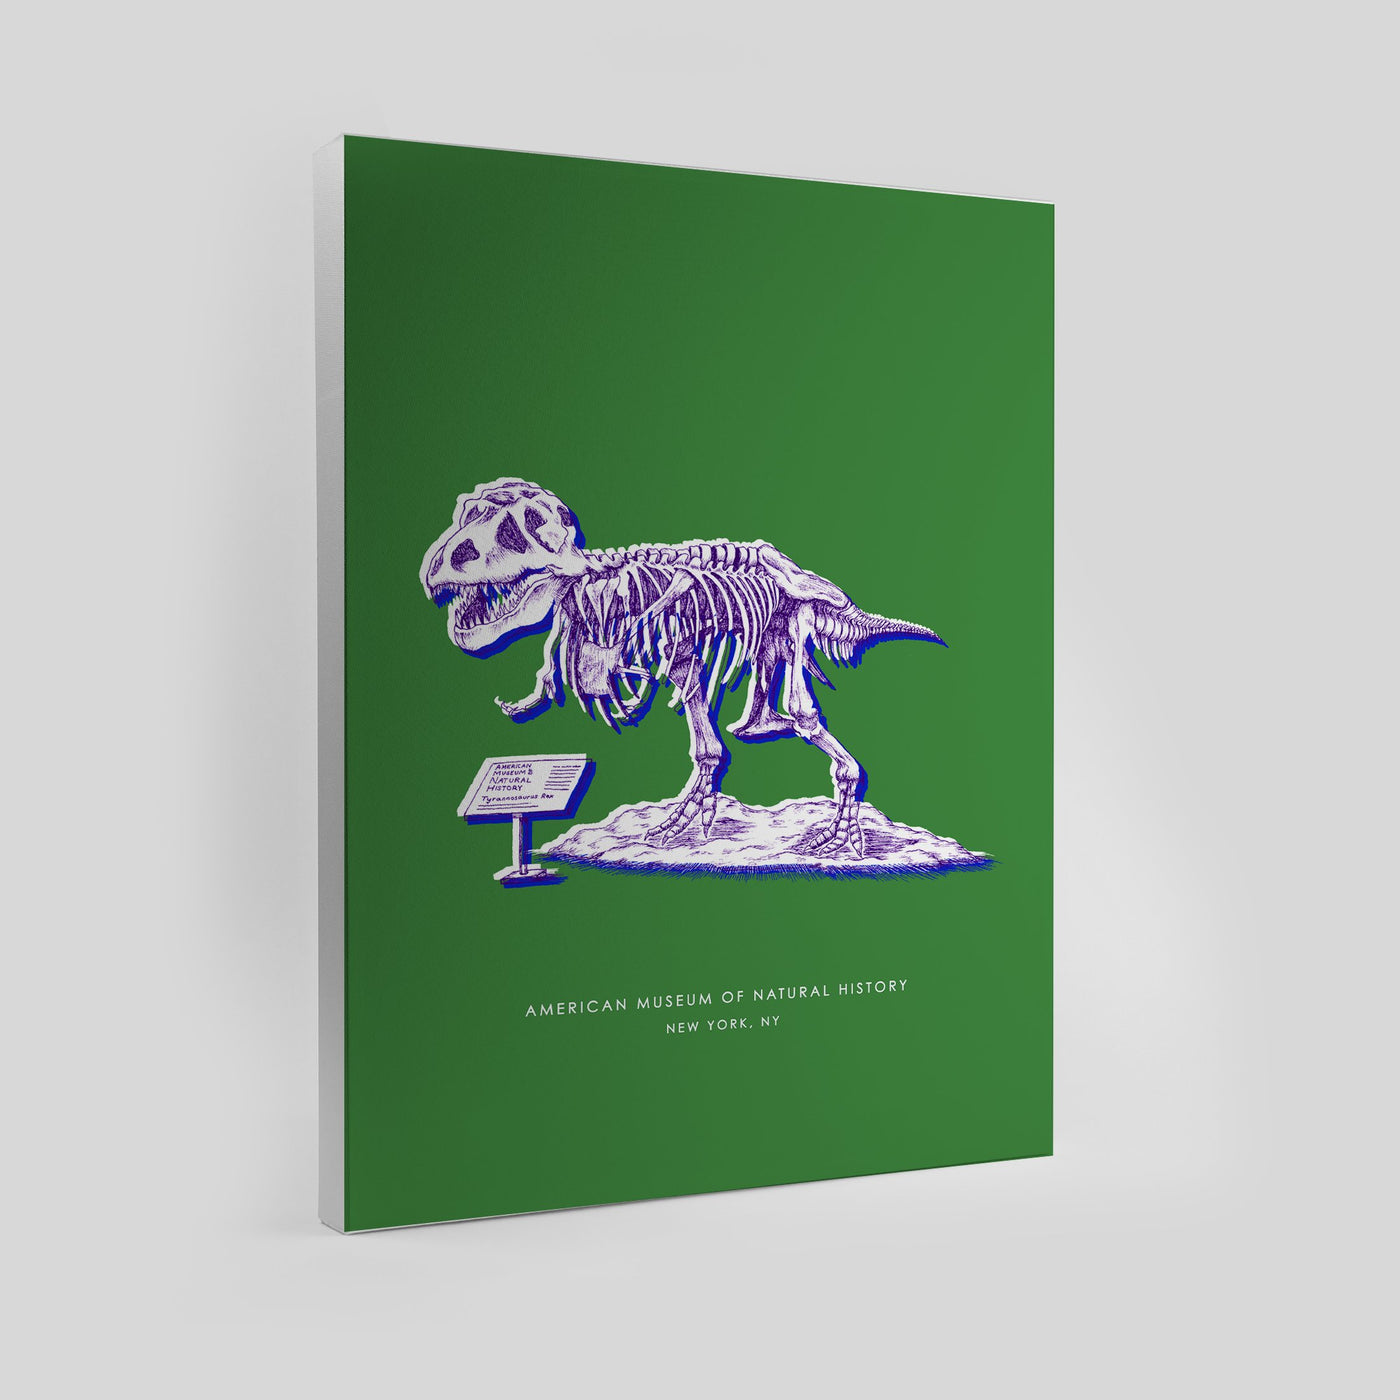 Gallery Prints Green Canvas / 8x10 / Unframed New York Dinosaur Print Katie Kime